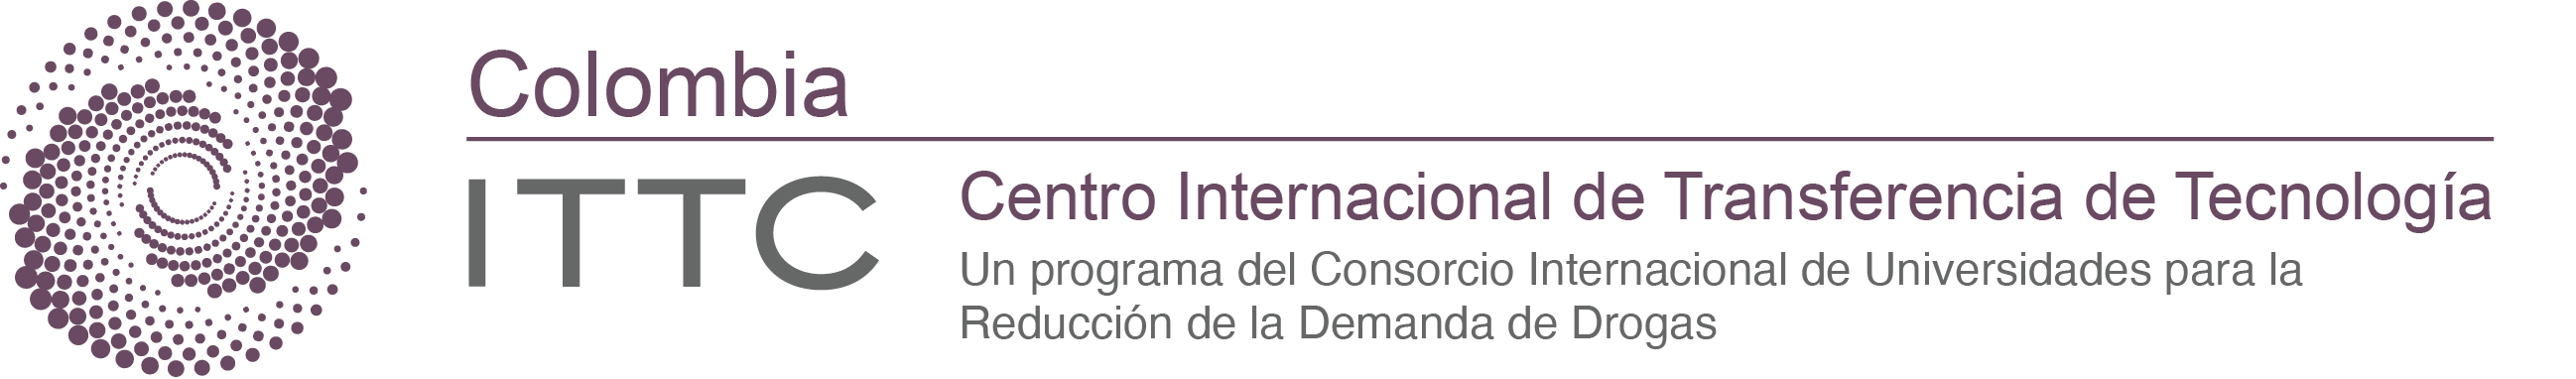 Colombia International Technology Transfer Center Logo